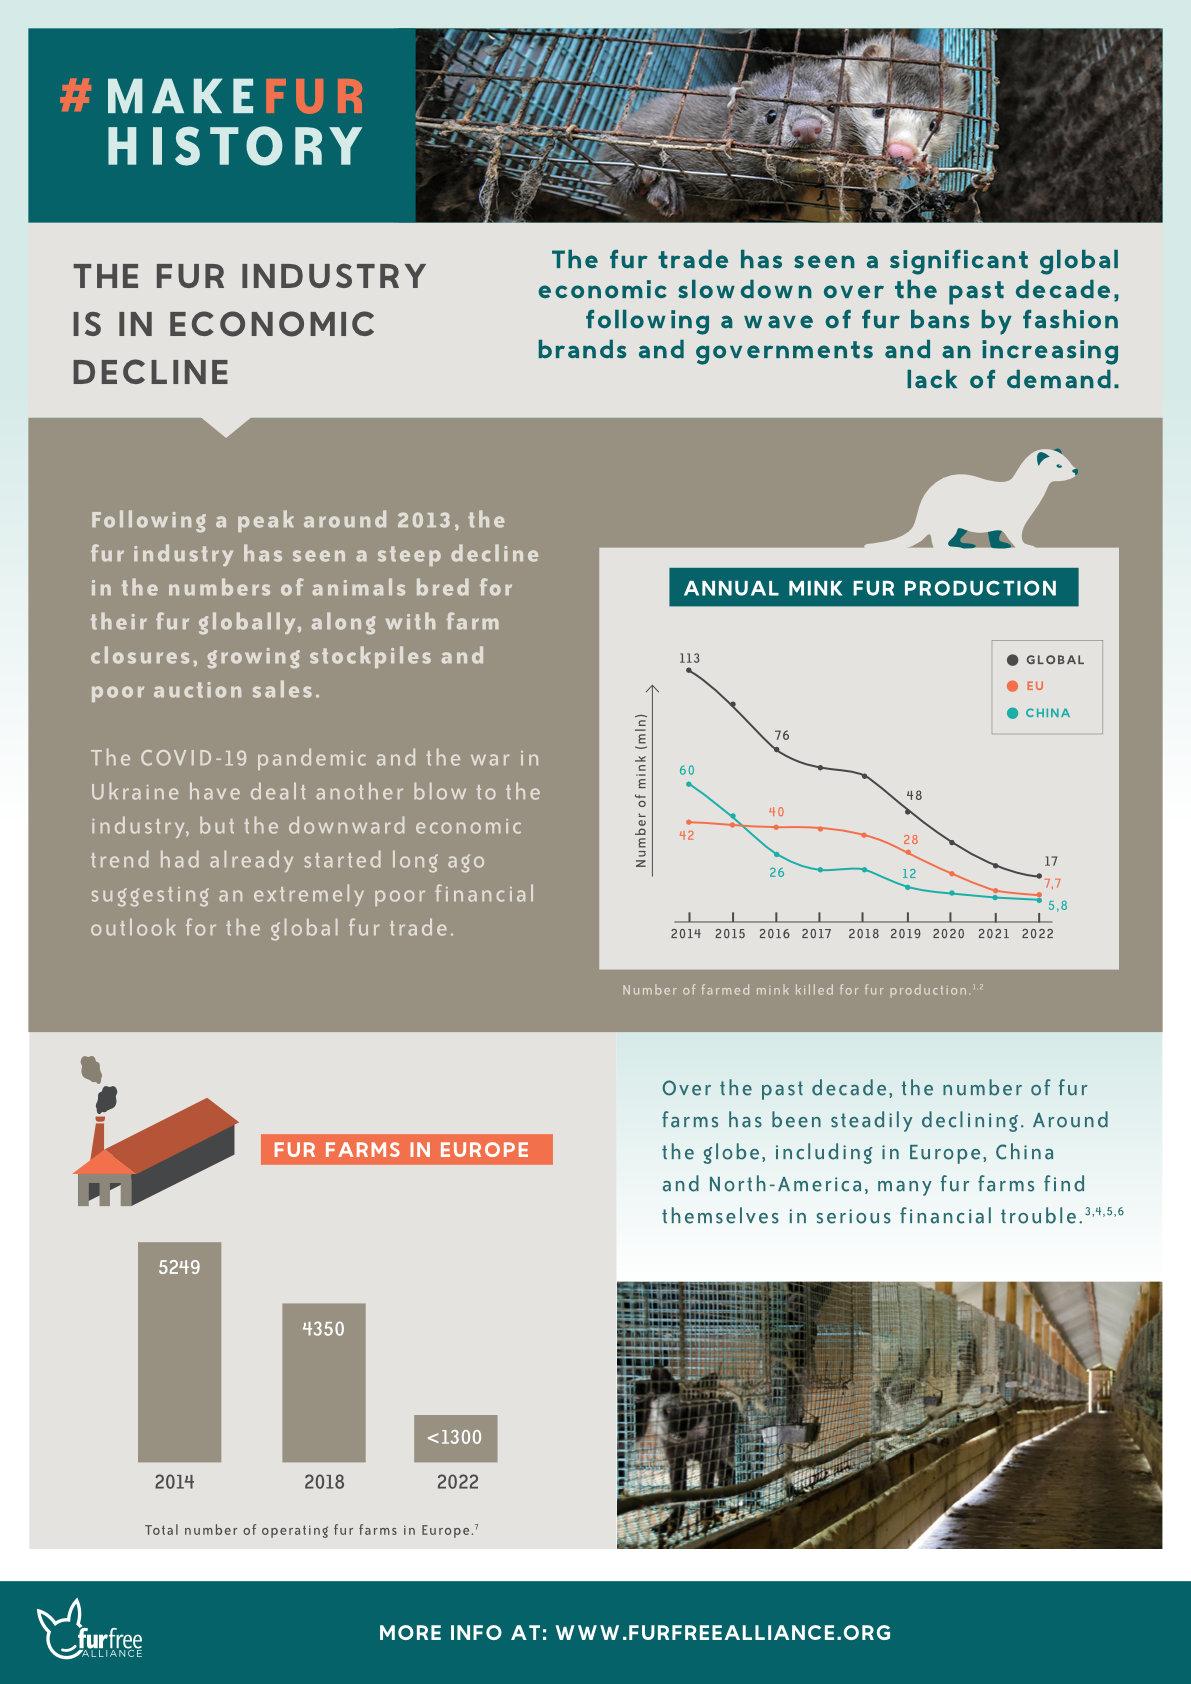 Fur industry in economic decline